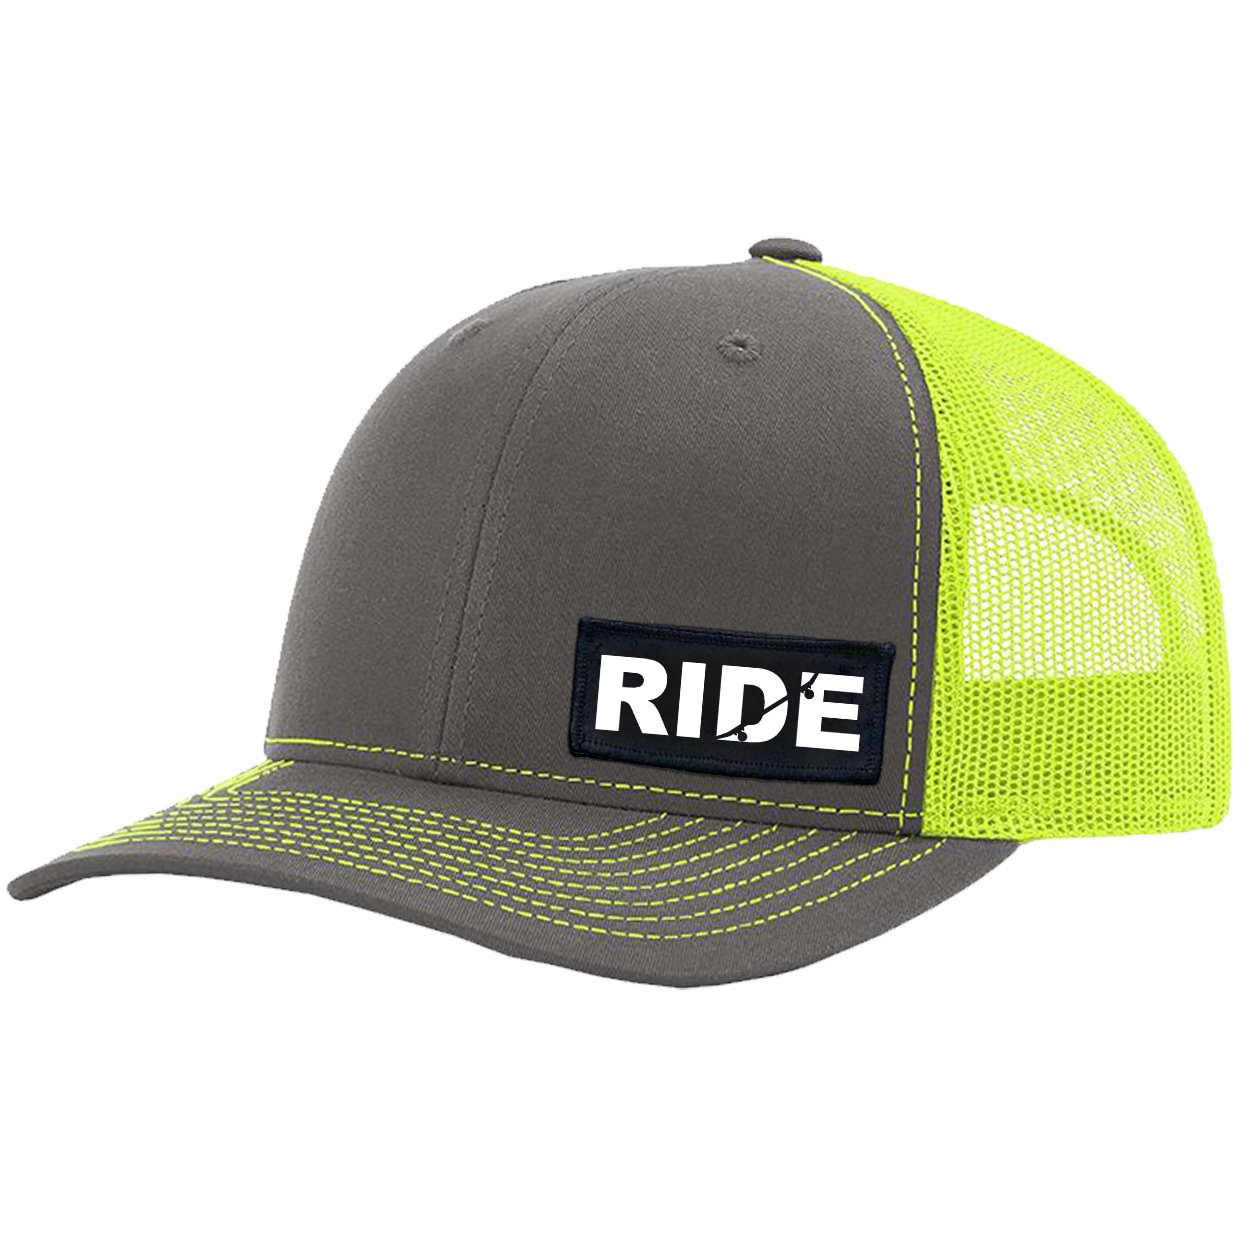 Ride Skateboard Logo Night Out Woven Patch Snapback Trucker Hat Charcoal/Neon Yellow (White Logo)